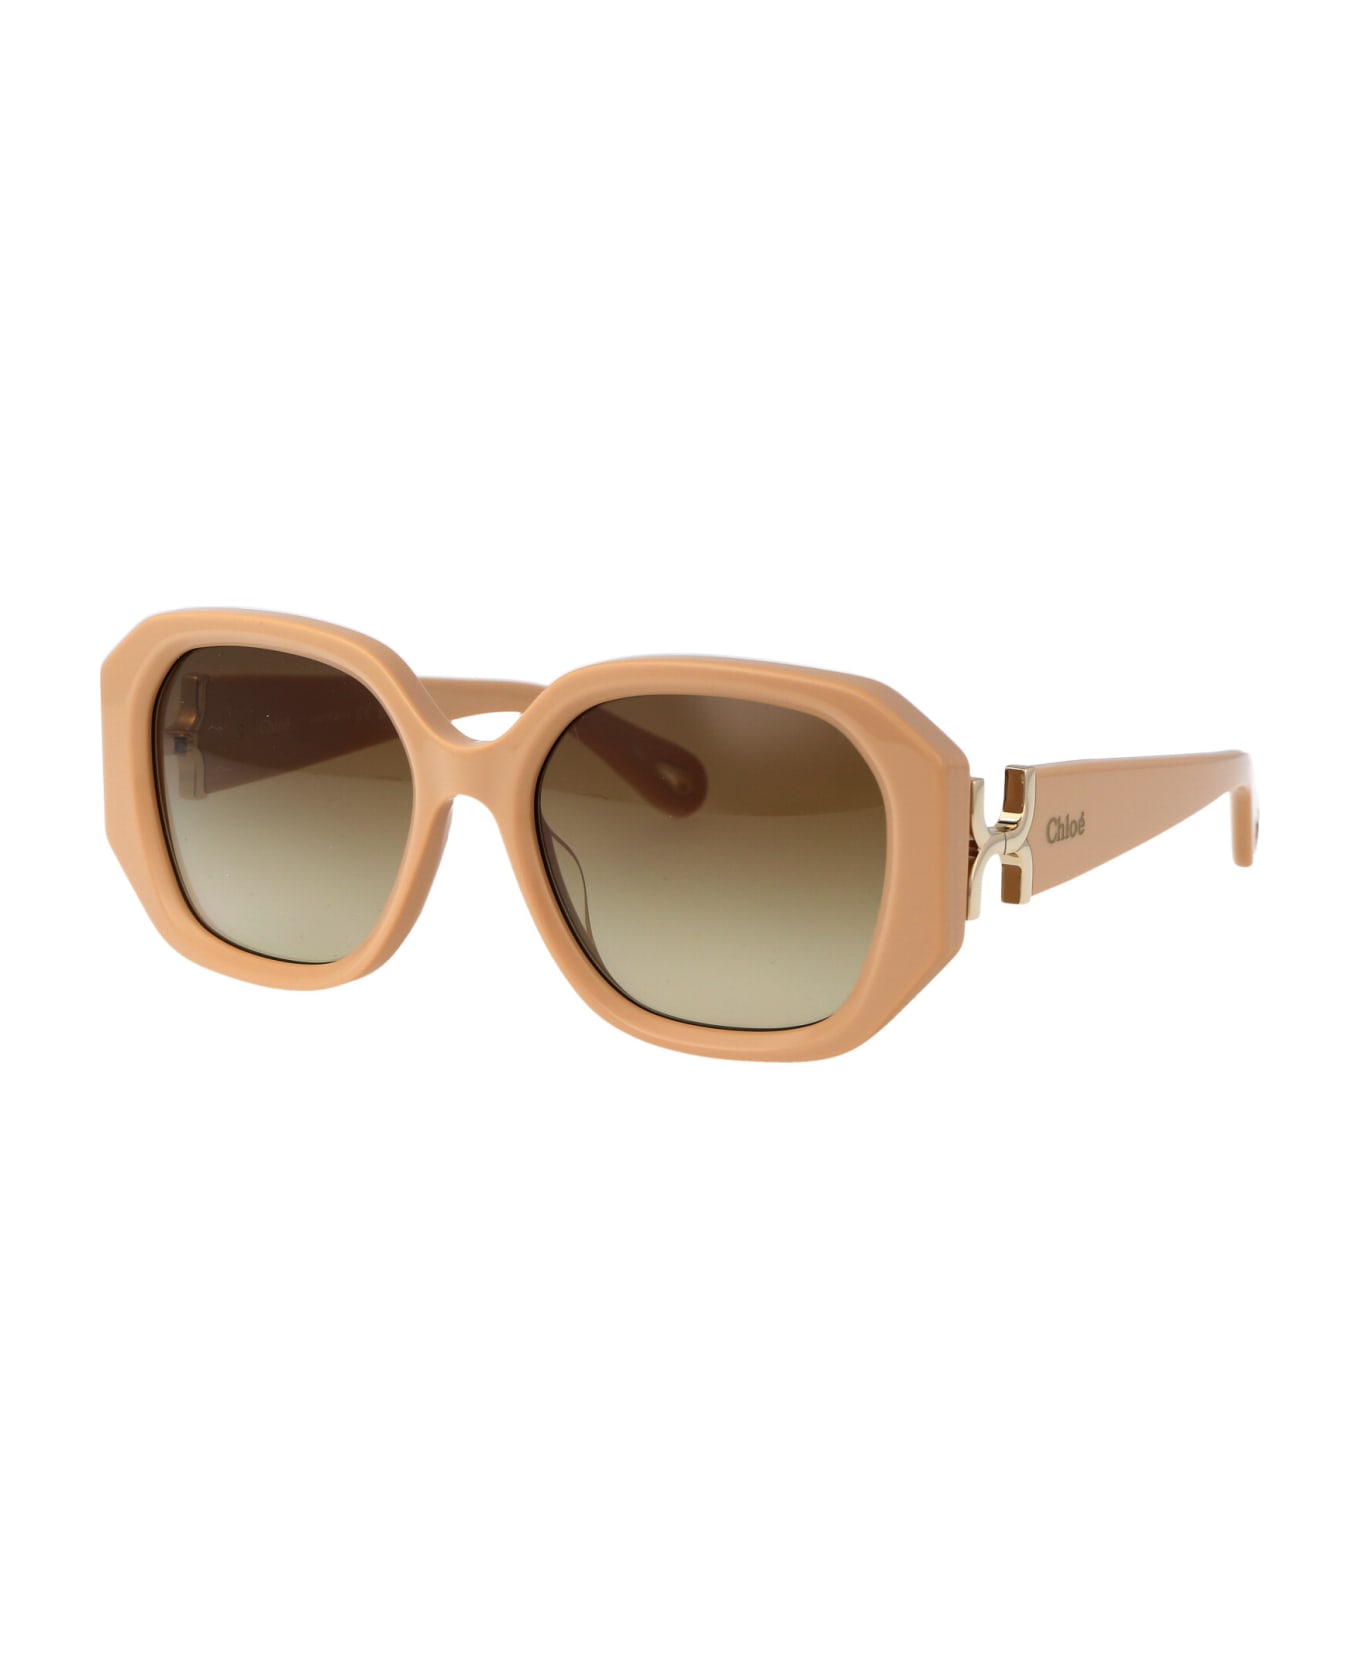 Chloé Eyewear Ch0236s Sunglasses - 004 IVORY IVORY BROWN